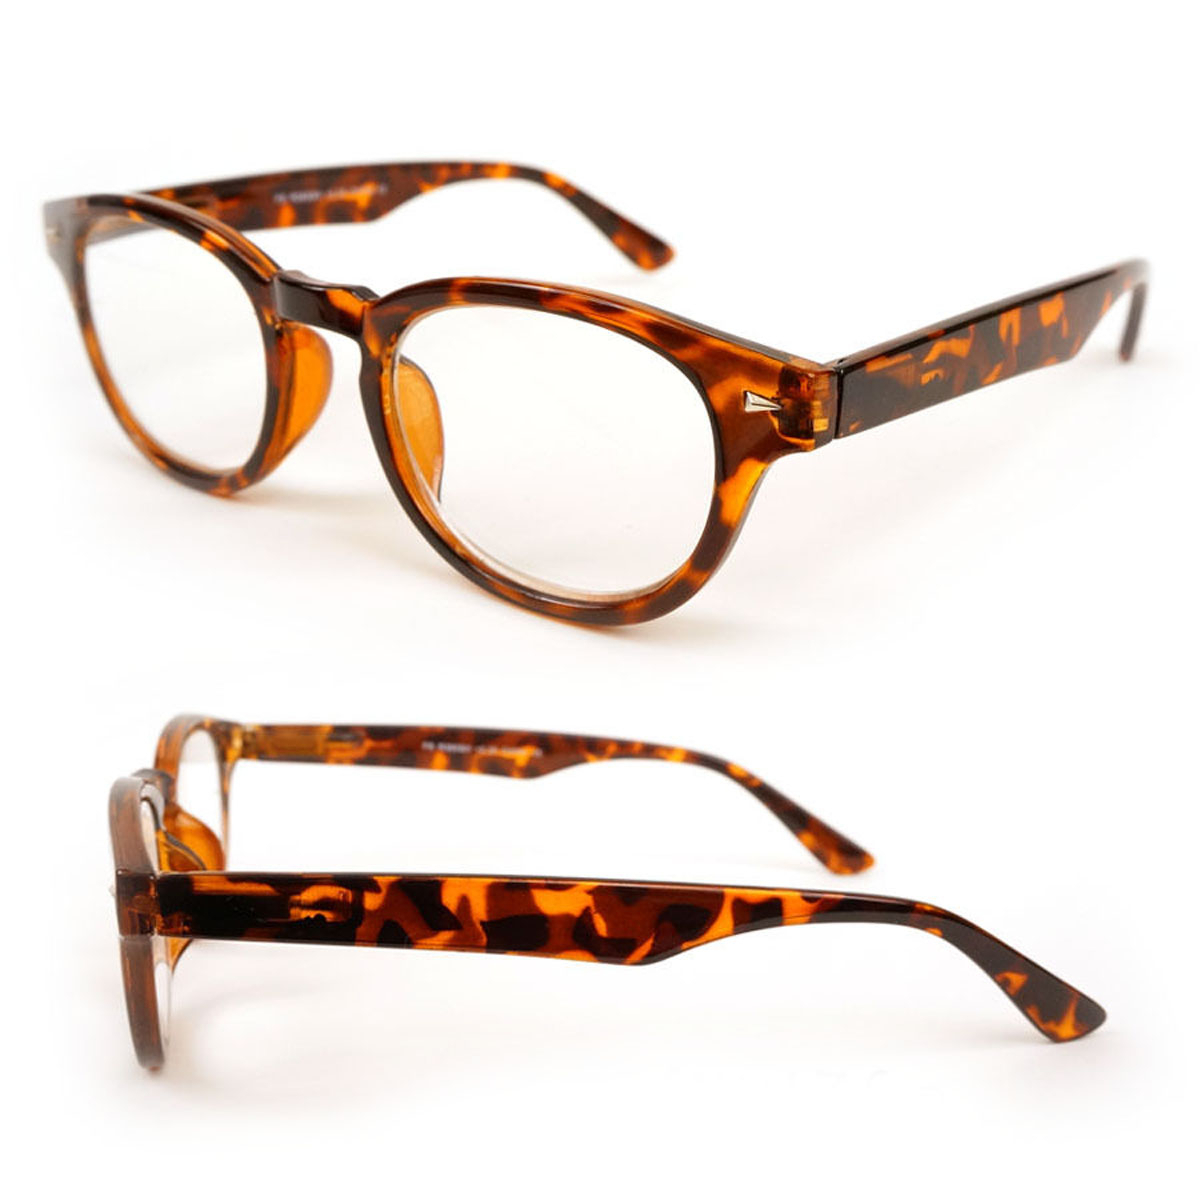 Medium Round Classic Frame Reading Glasses Geek Retro Vintage Style 100-375 - Brown, +2.75